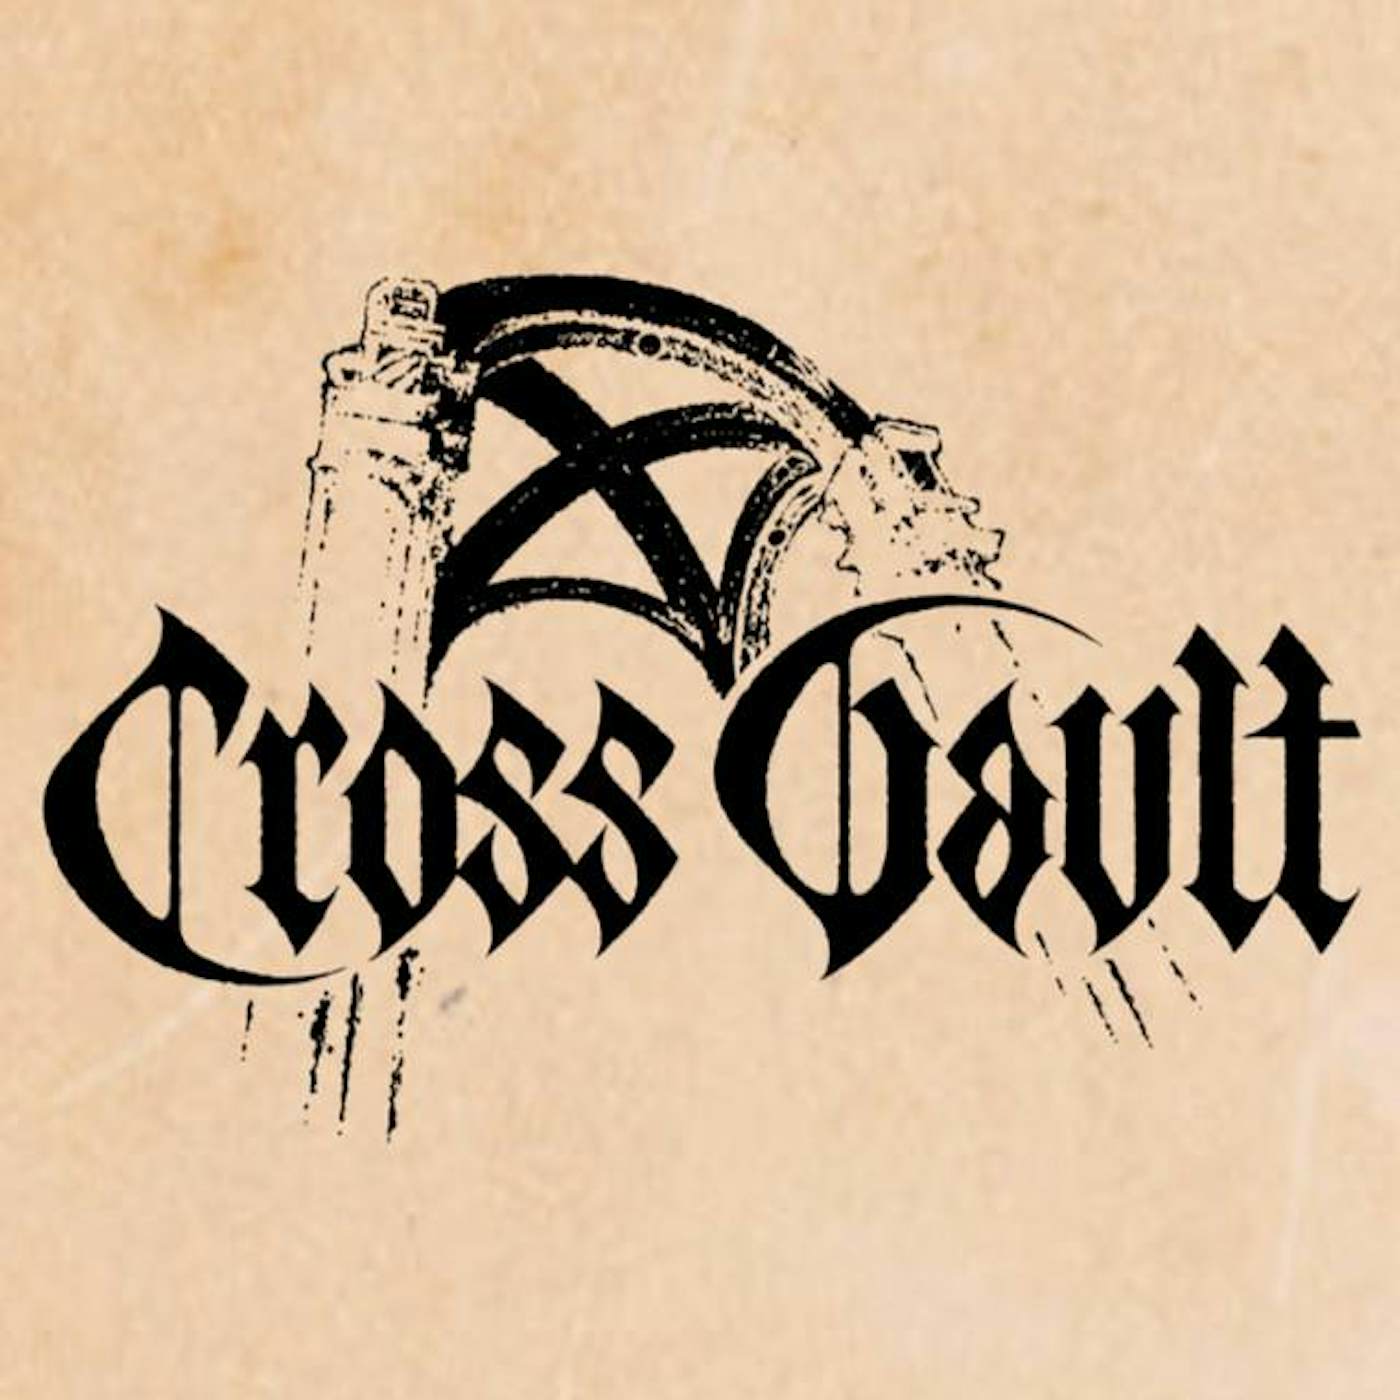 Cross Vault